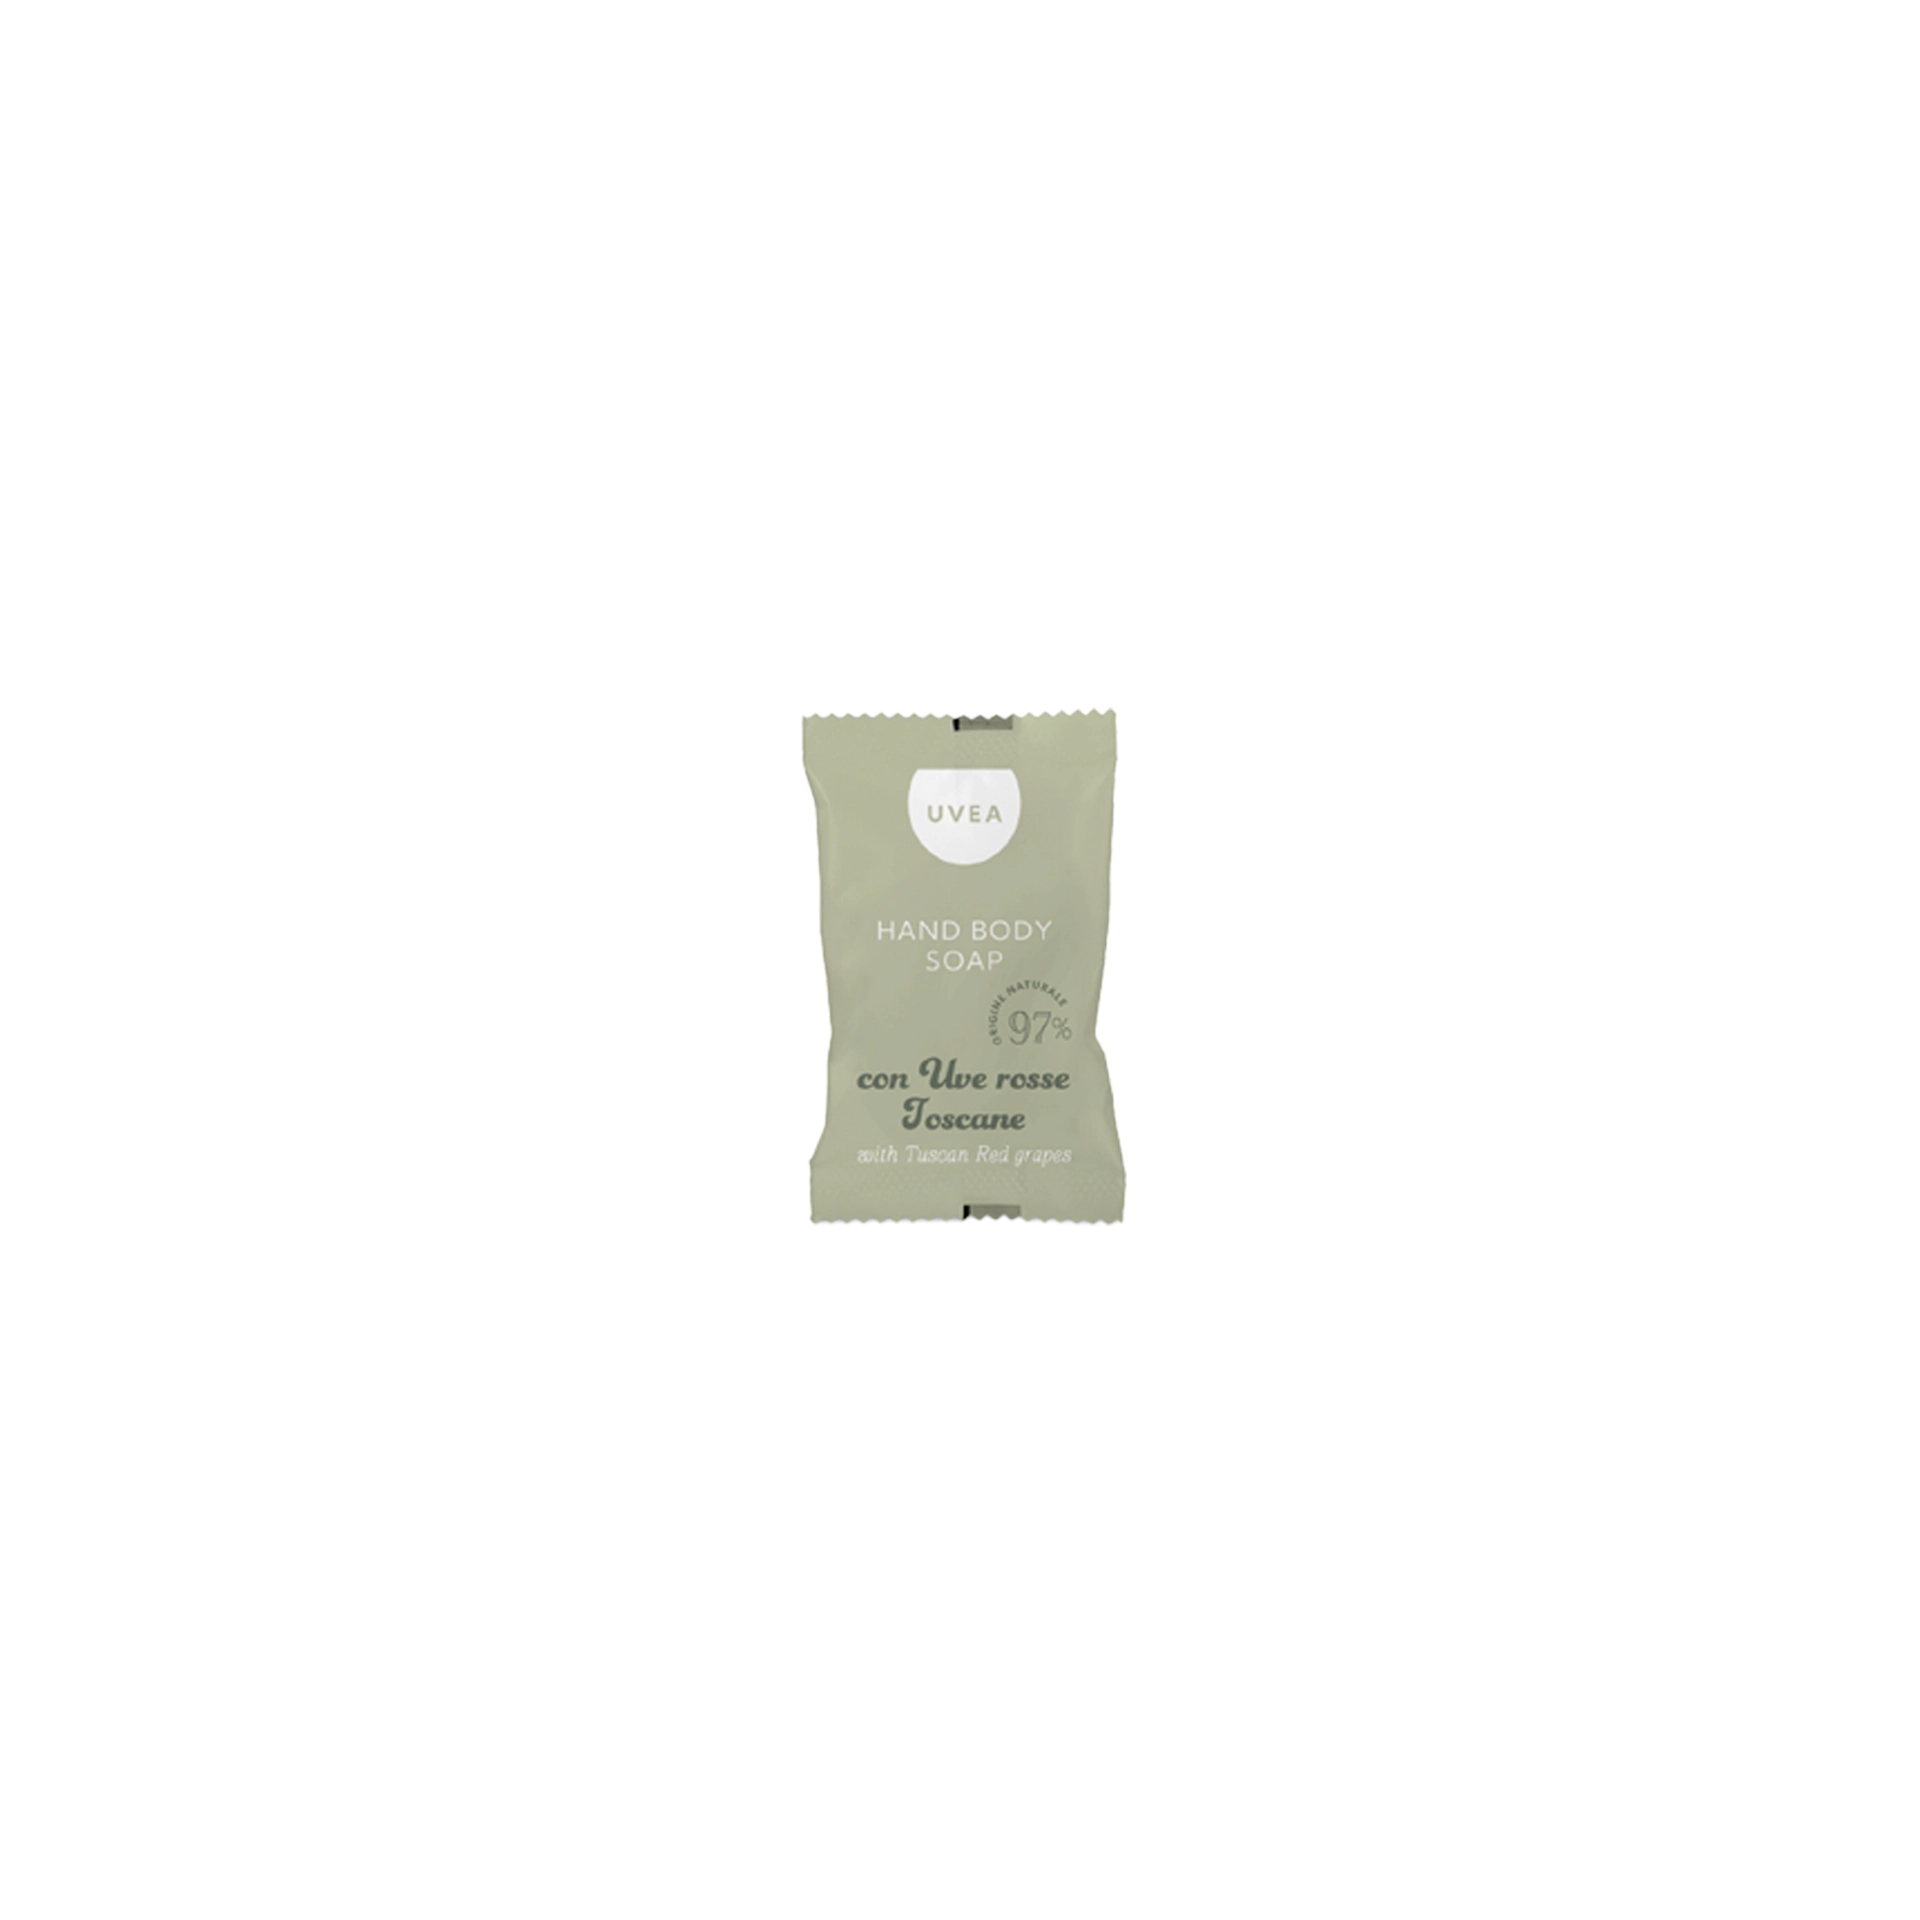 Sapone | Uvea vegetale | fragranza all´uva flowpack | 8 g